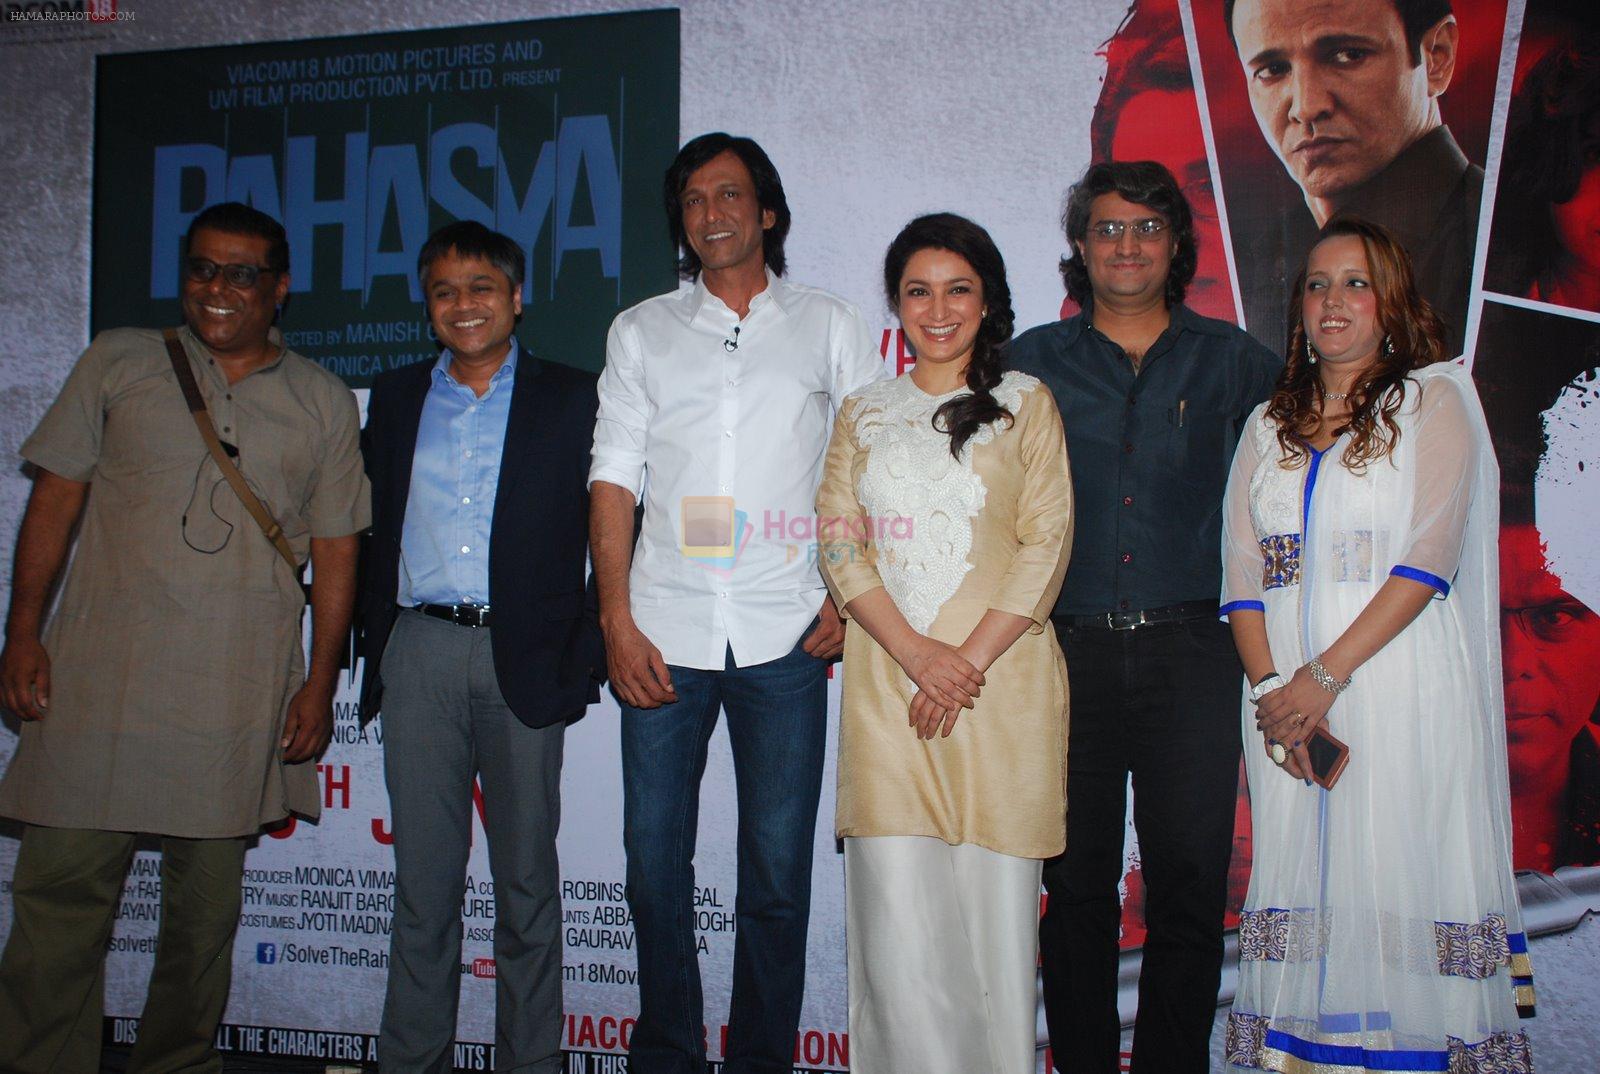 Tisca Chopra, Kay Kay Menon on location of film Rahasya in Juhu, Mumbai on 12th Jan 2015